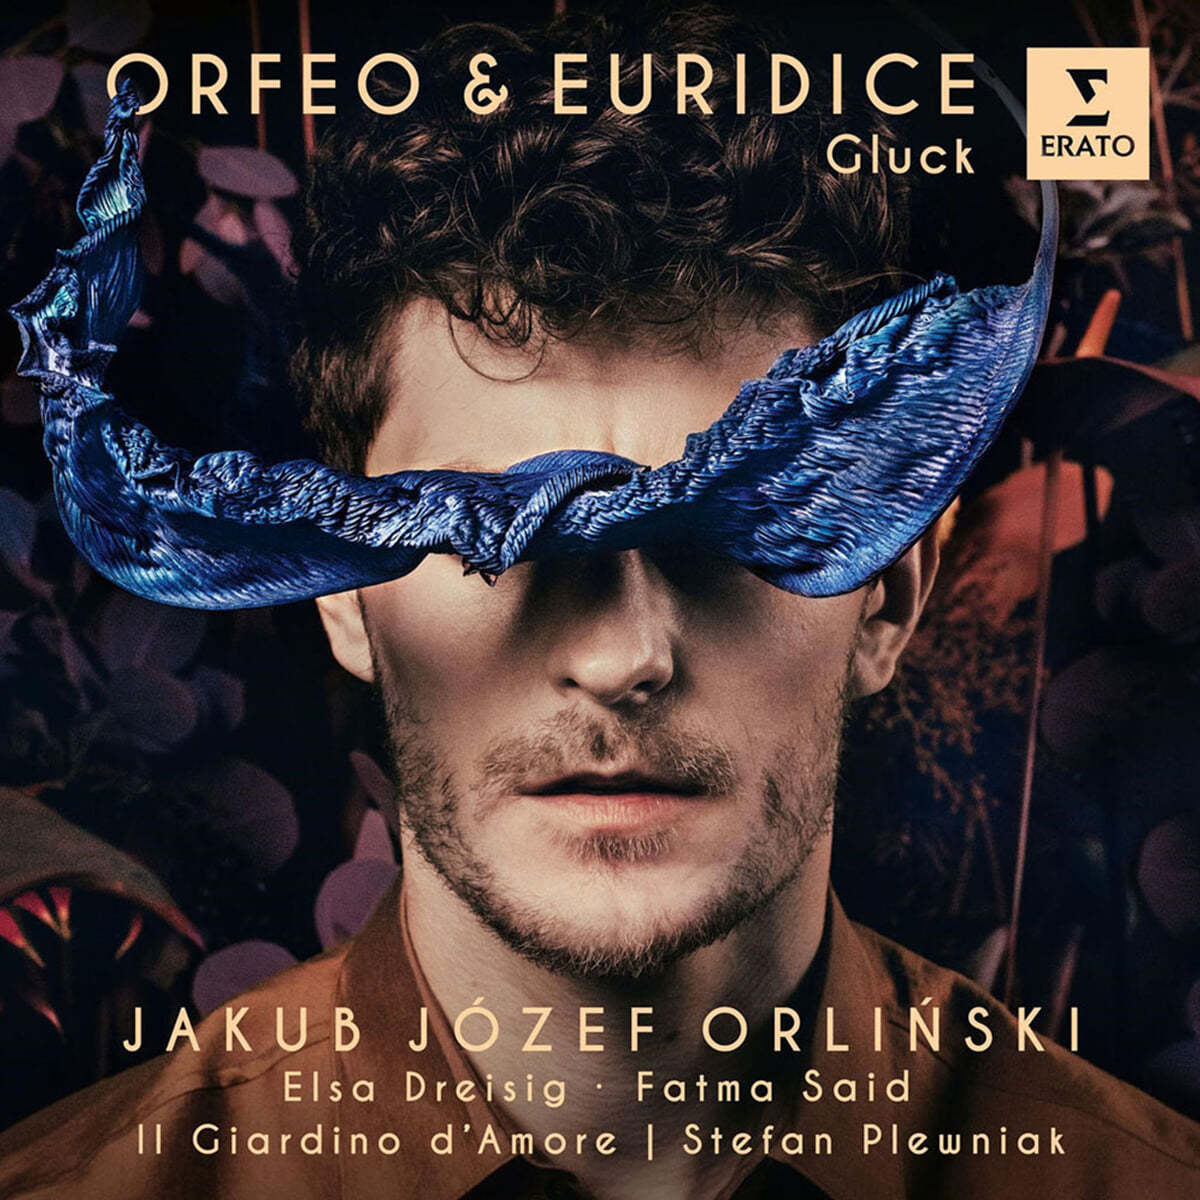 Jakub Jozef Orlinski 글룩: 오페라 &#39;오르페오와 에우리디체&#39; (Gluck: Orfeo &amp; Euridice)